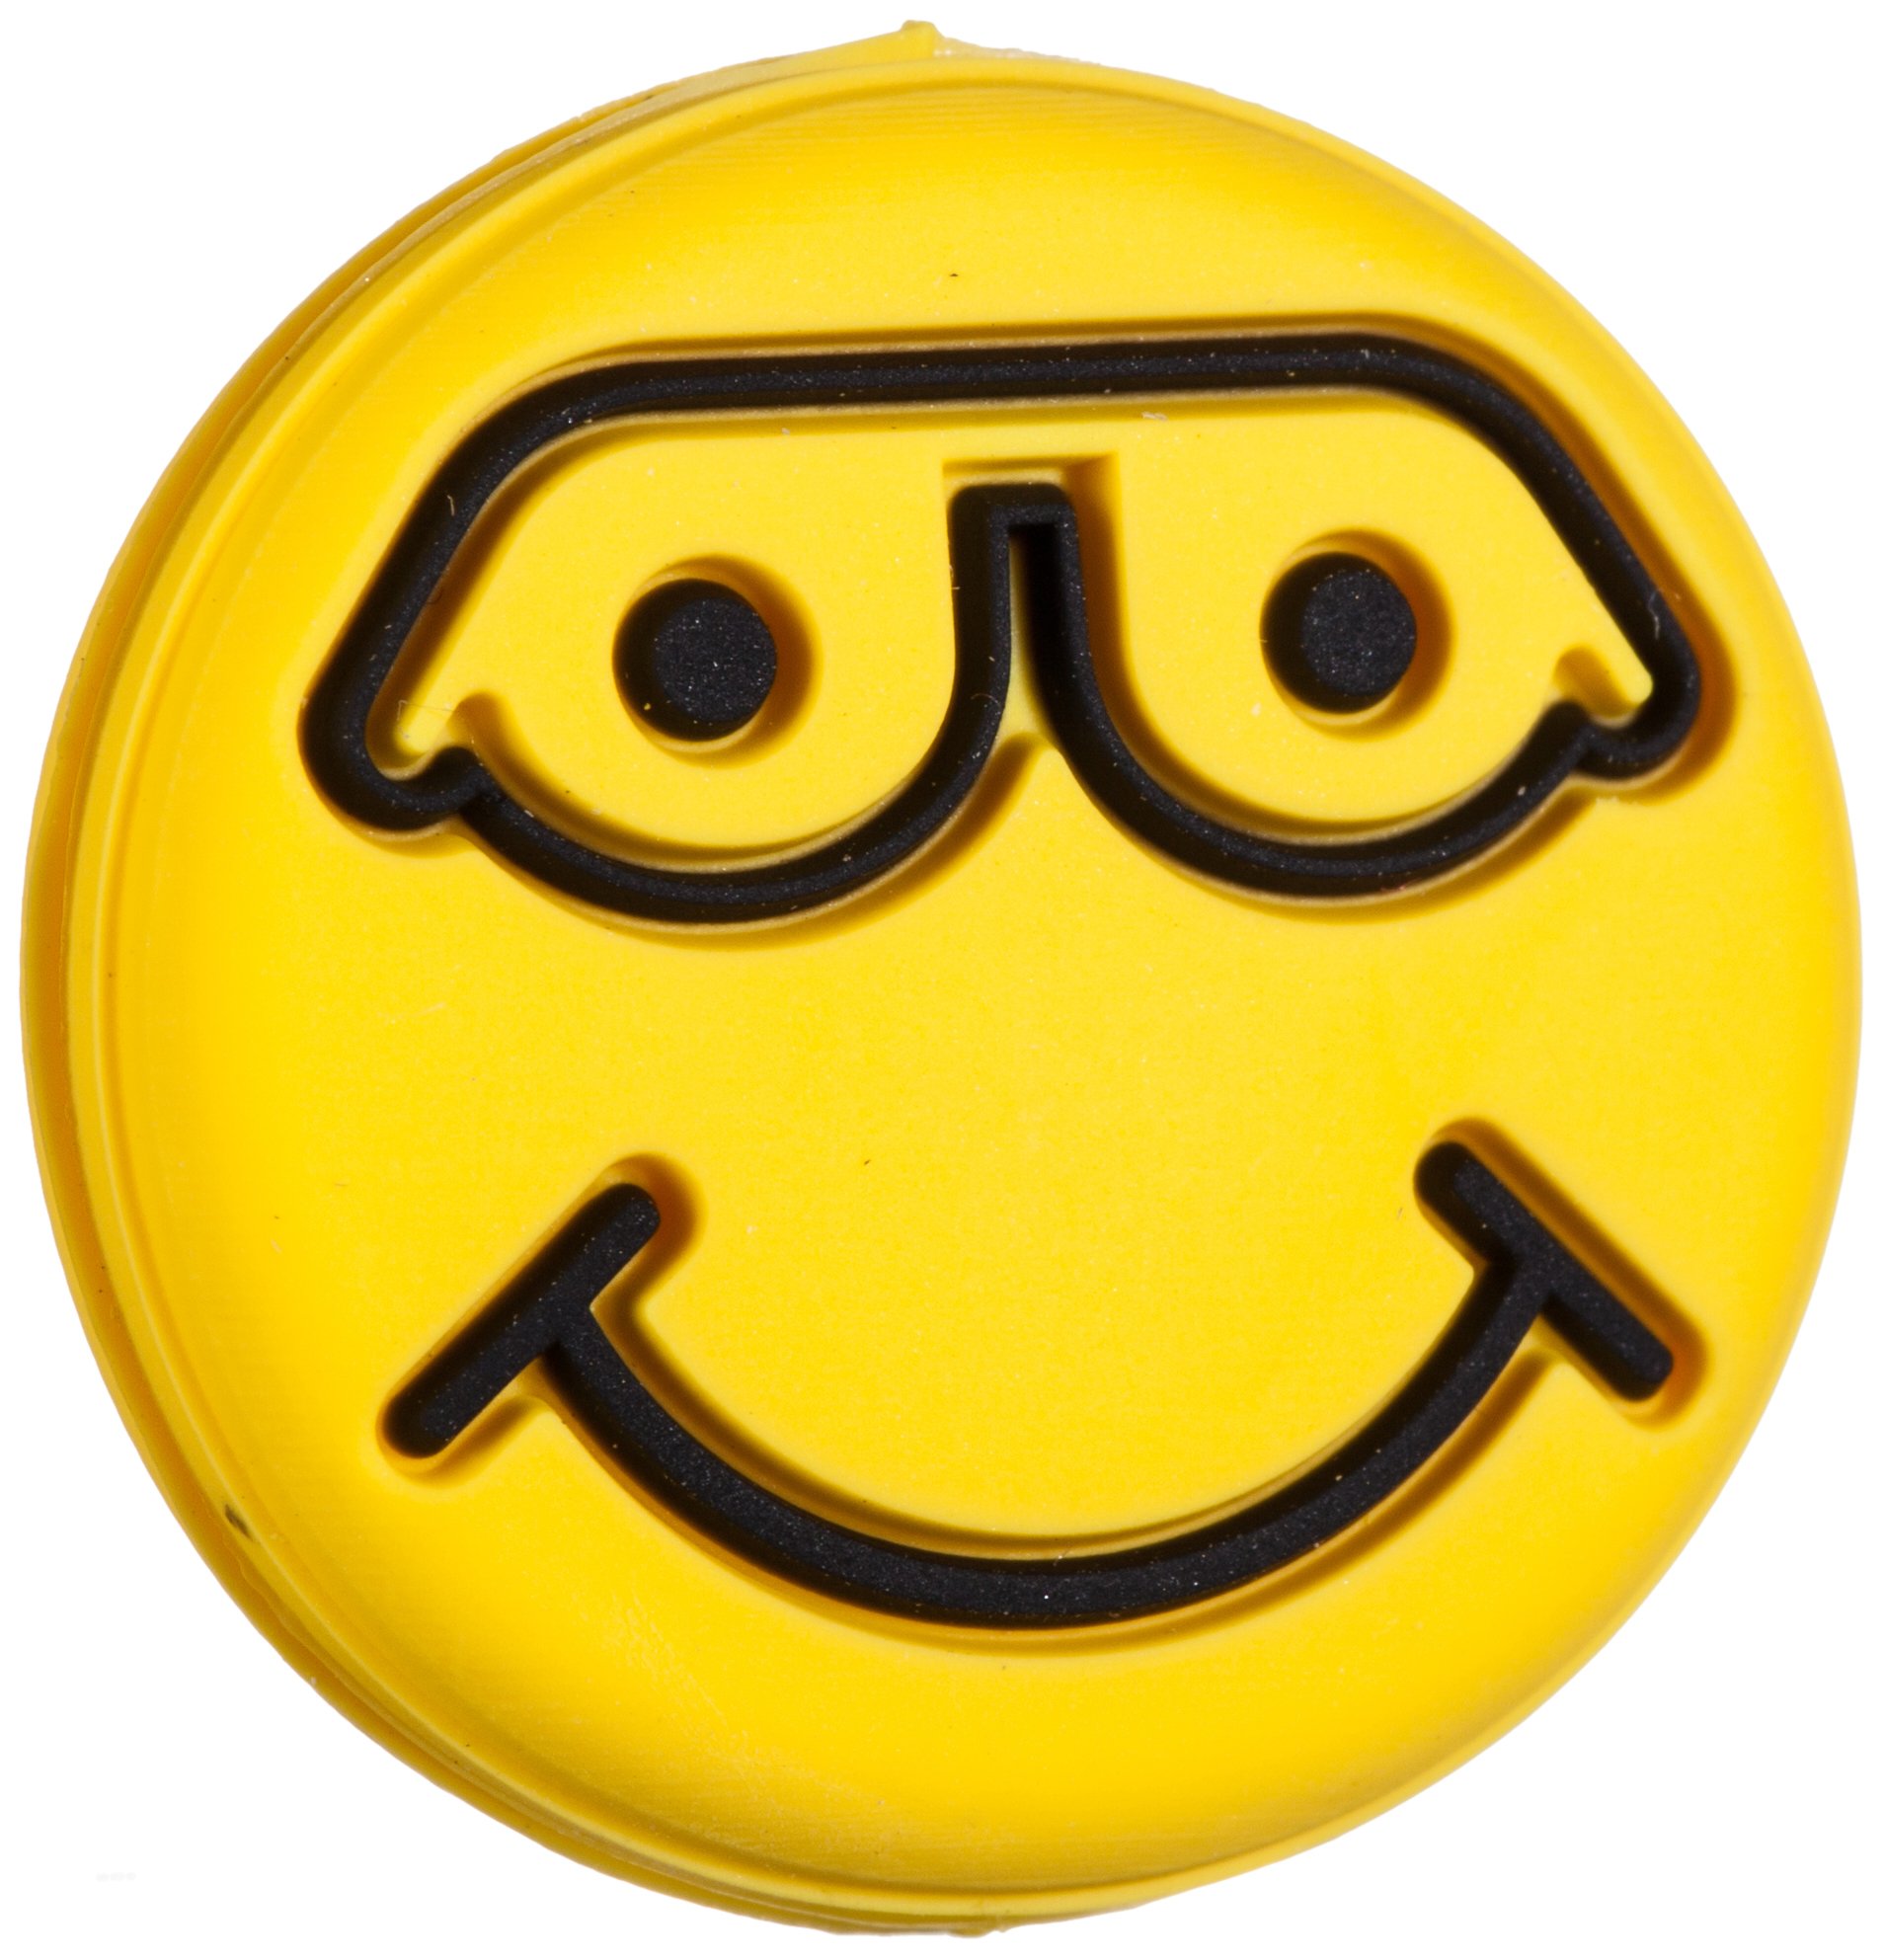 16 Wilson Emoji Emoticon Tennis Vibration Shock Absorber Dampeners Emotisorbs 